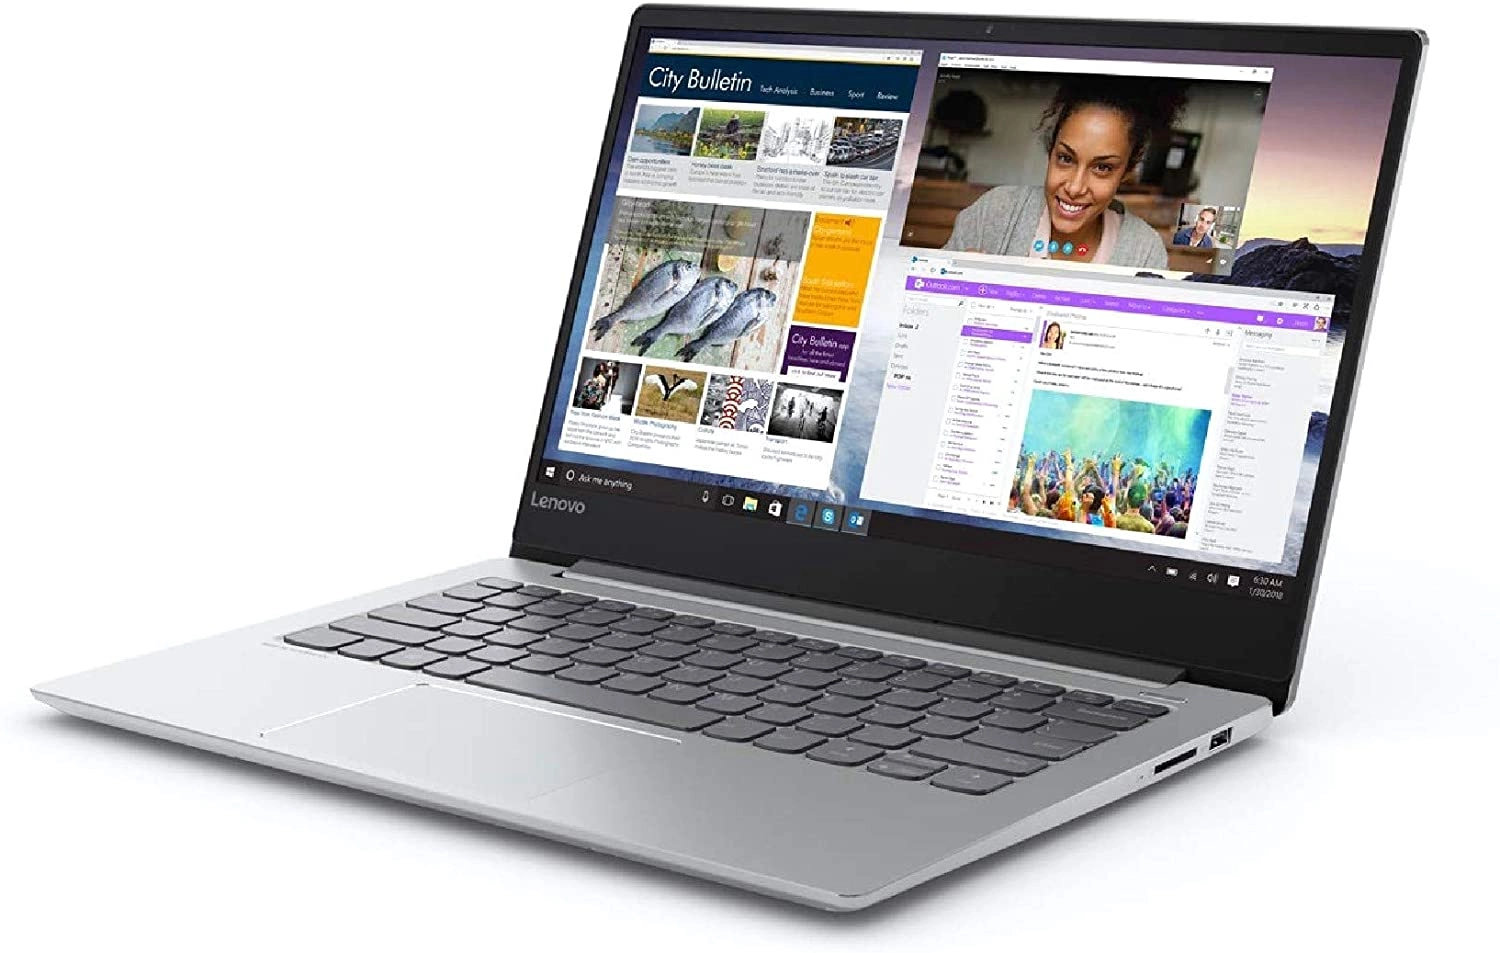 Lenovo 720S laptop image